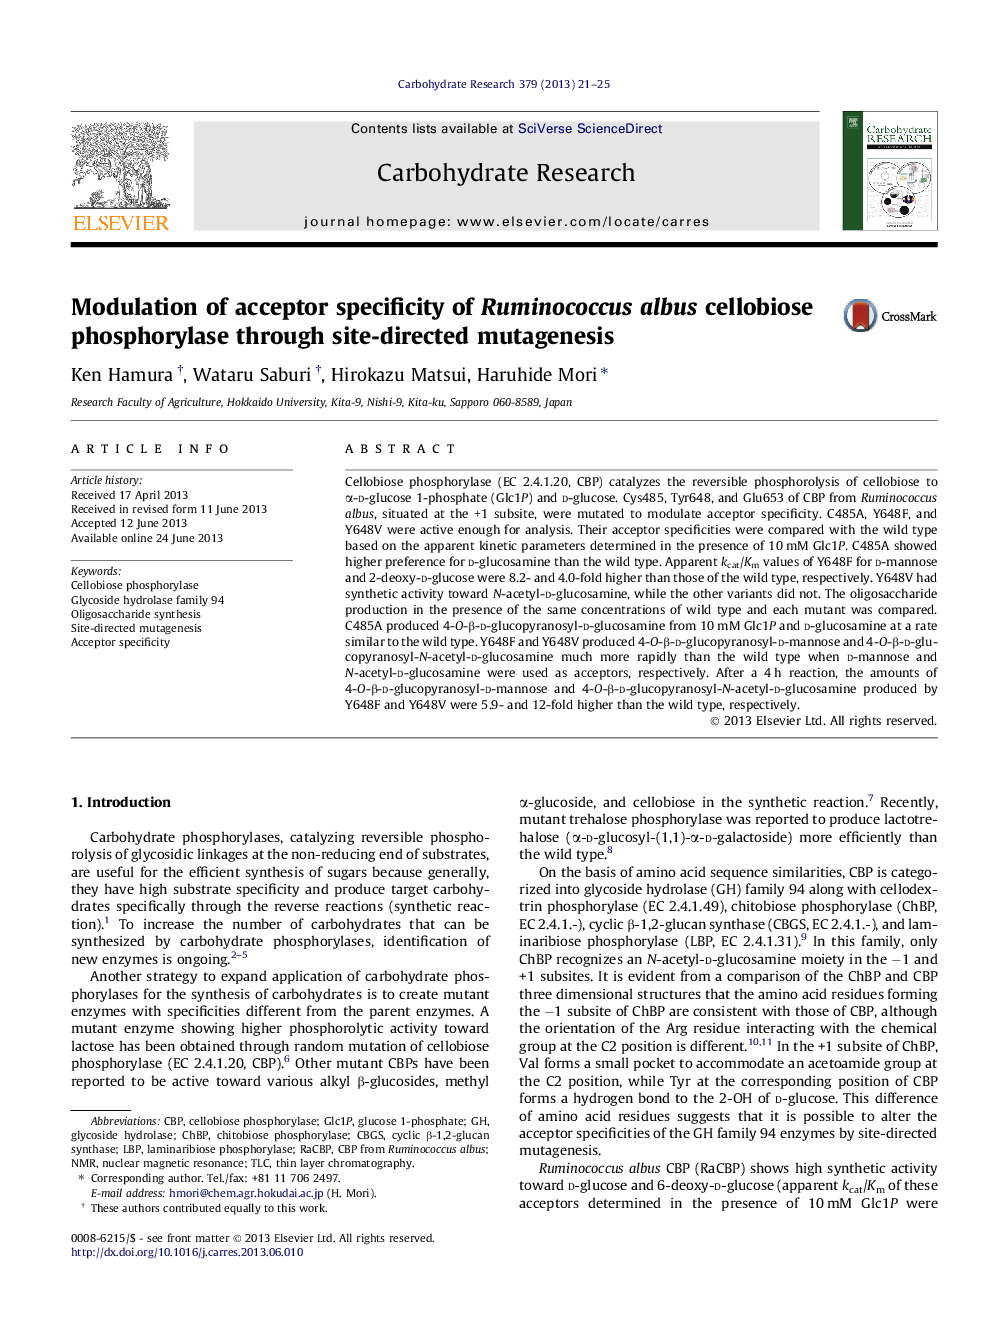 Modulation of acceptor specificity of Ruminococcus albus cellobiose phosphorylase through site-directed mutagenesis